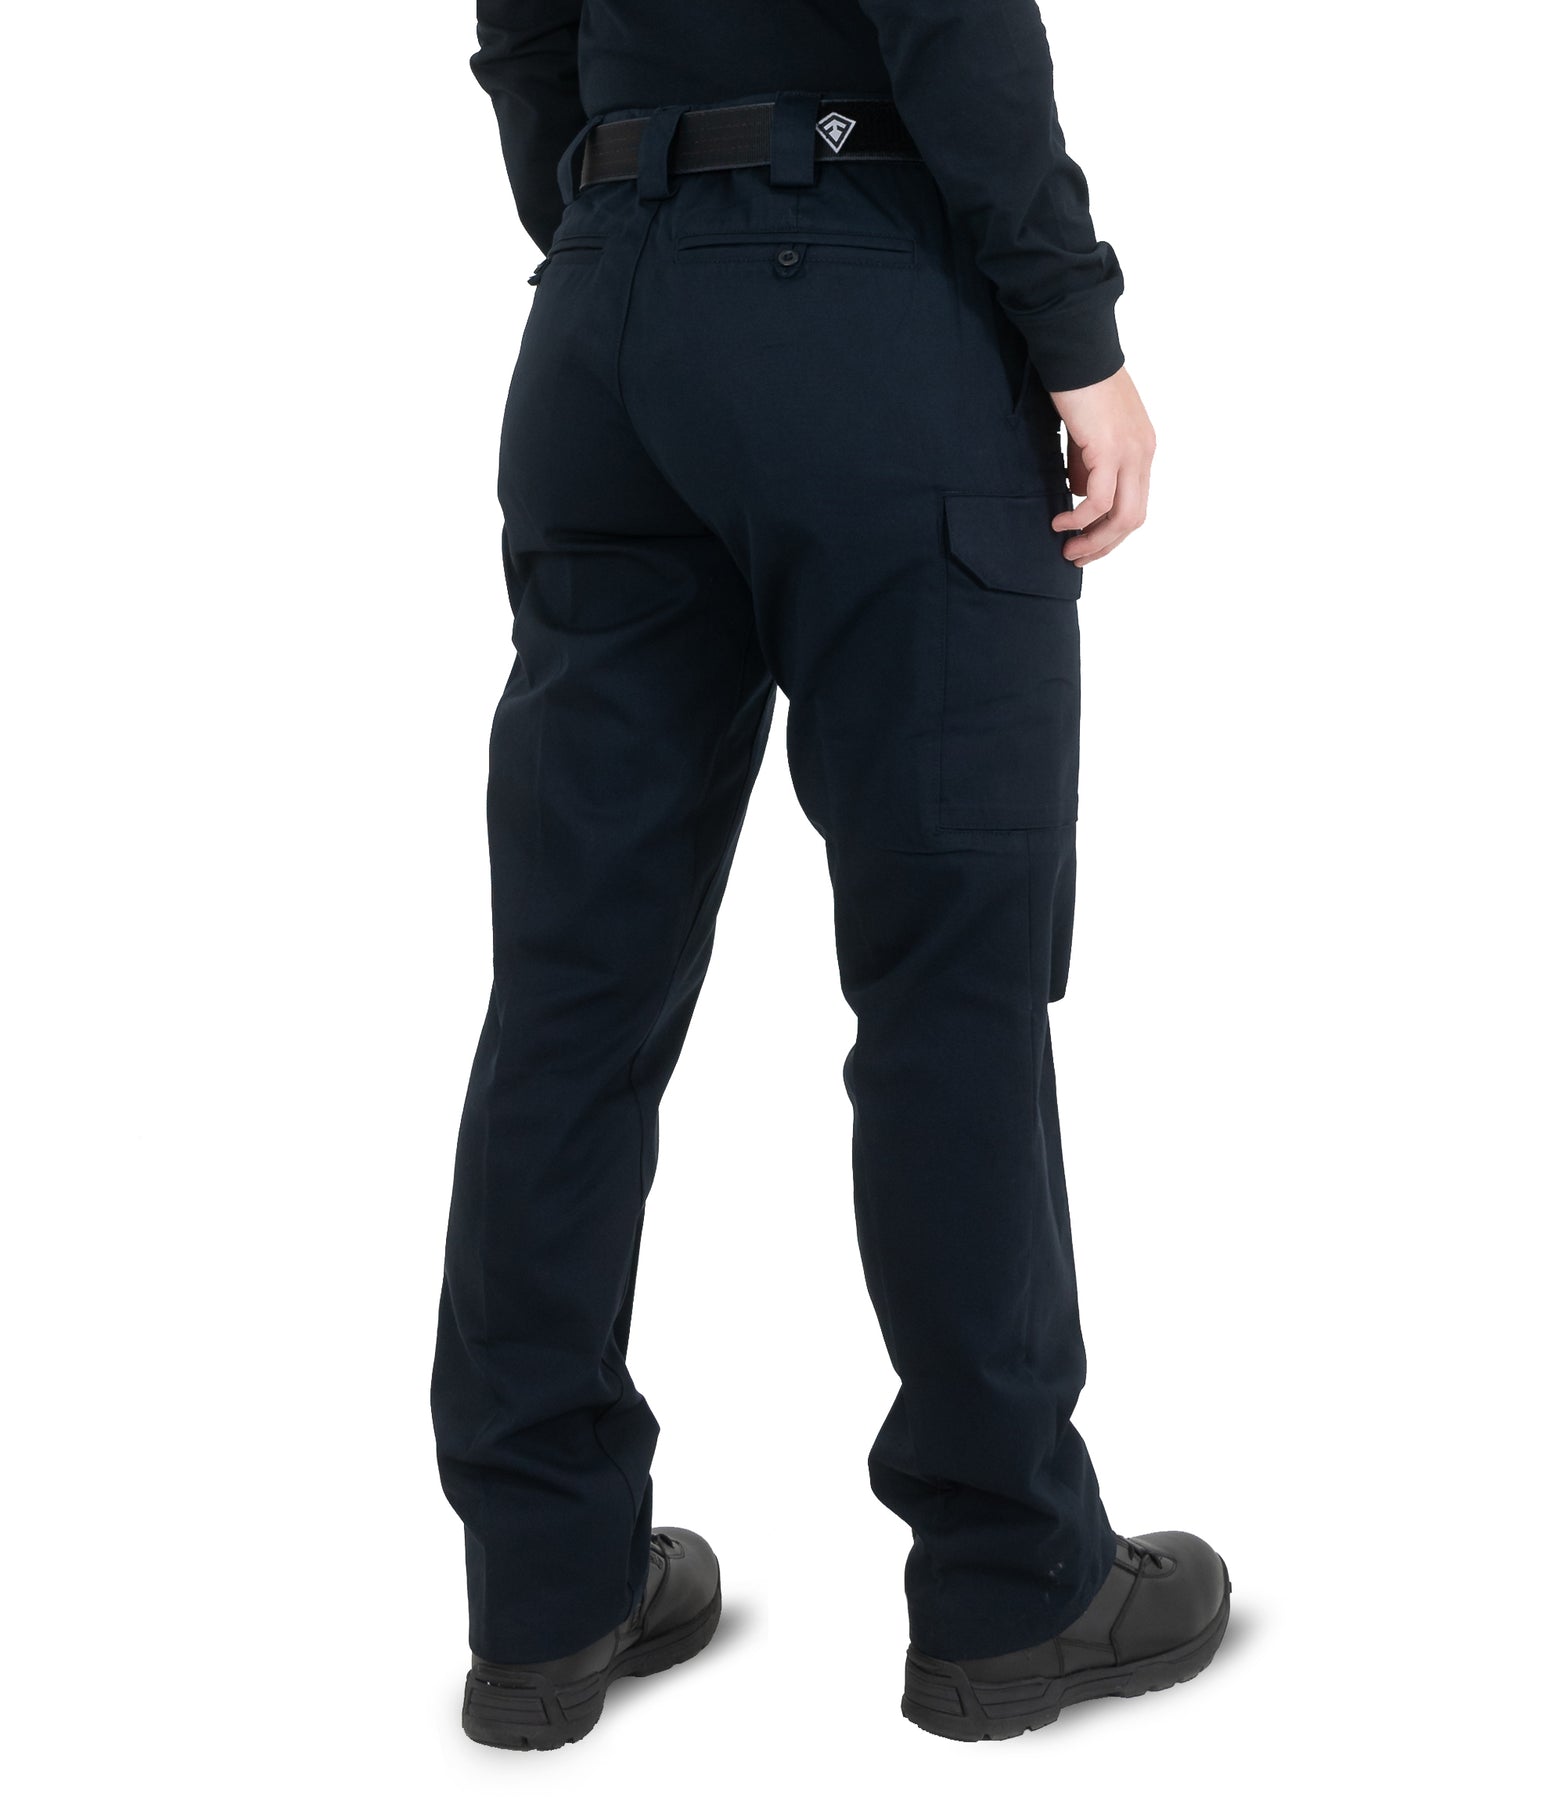 Women's Tactical Pants - Cargo Tactical Pants Designed For Women ...